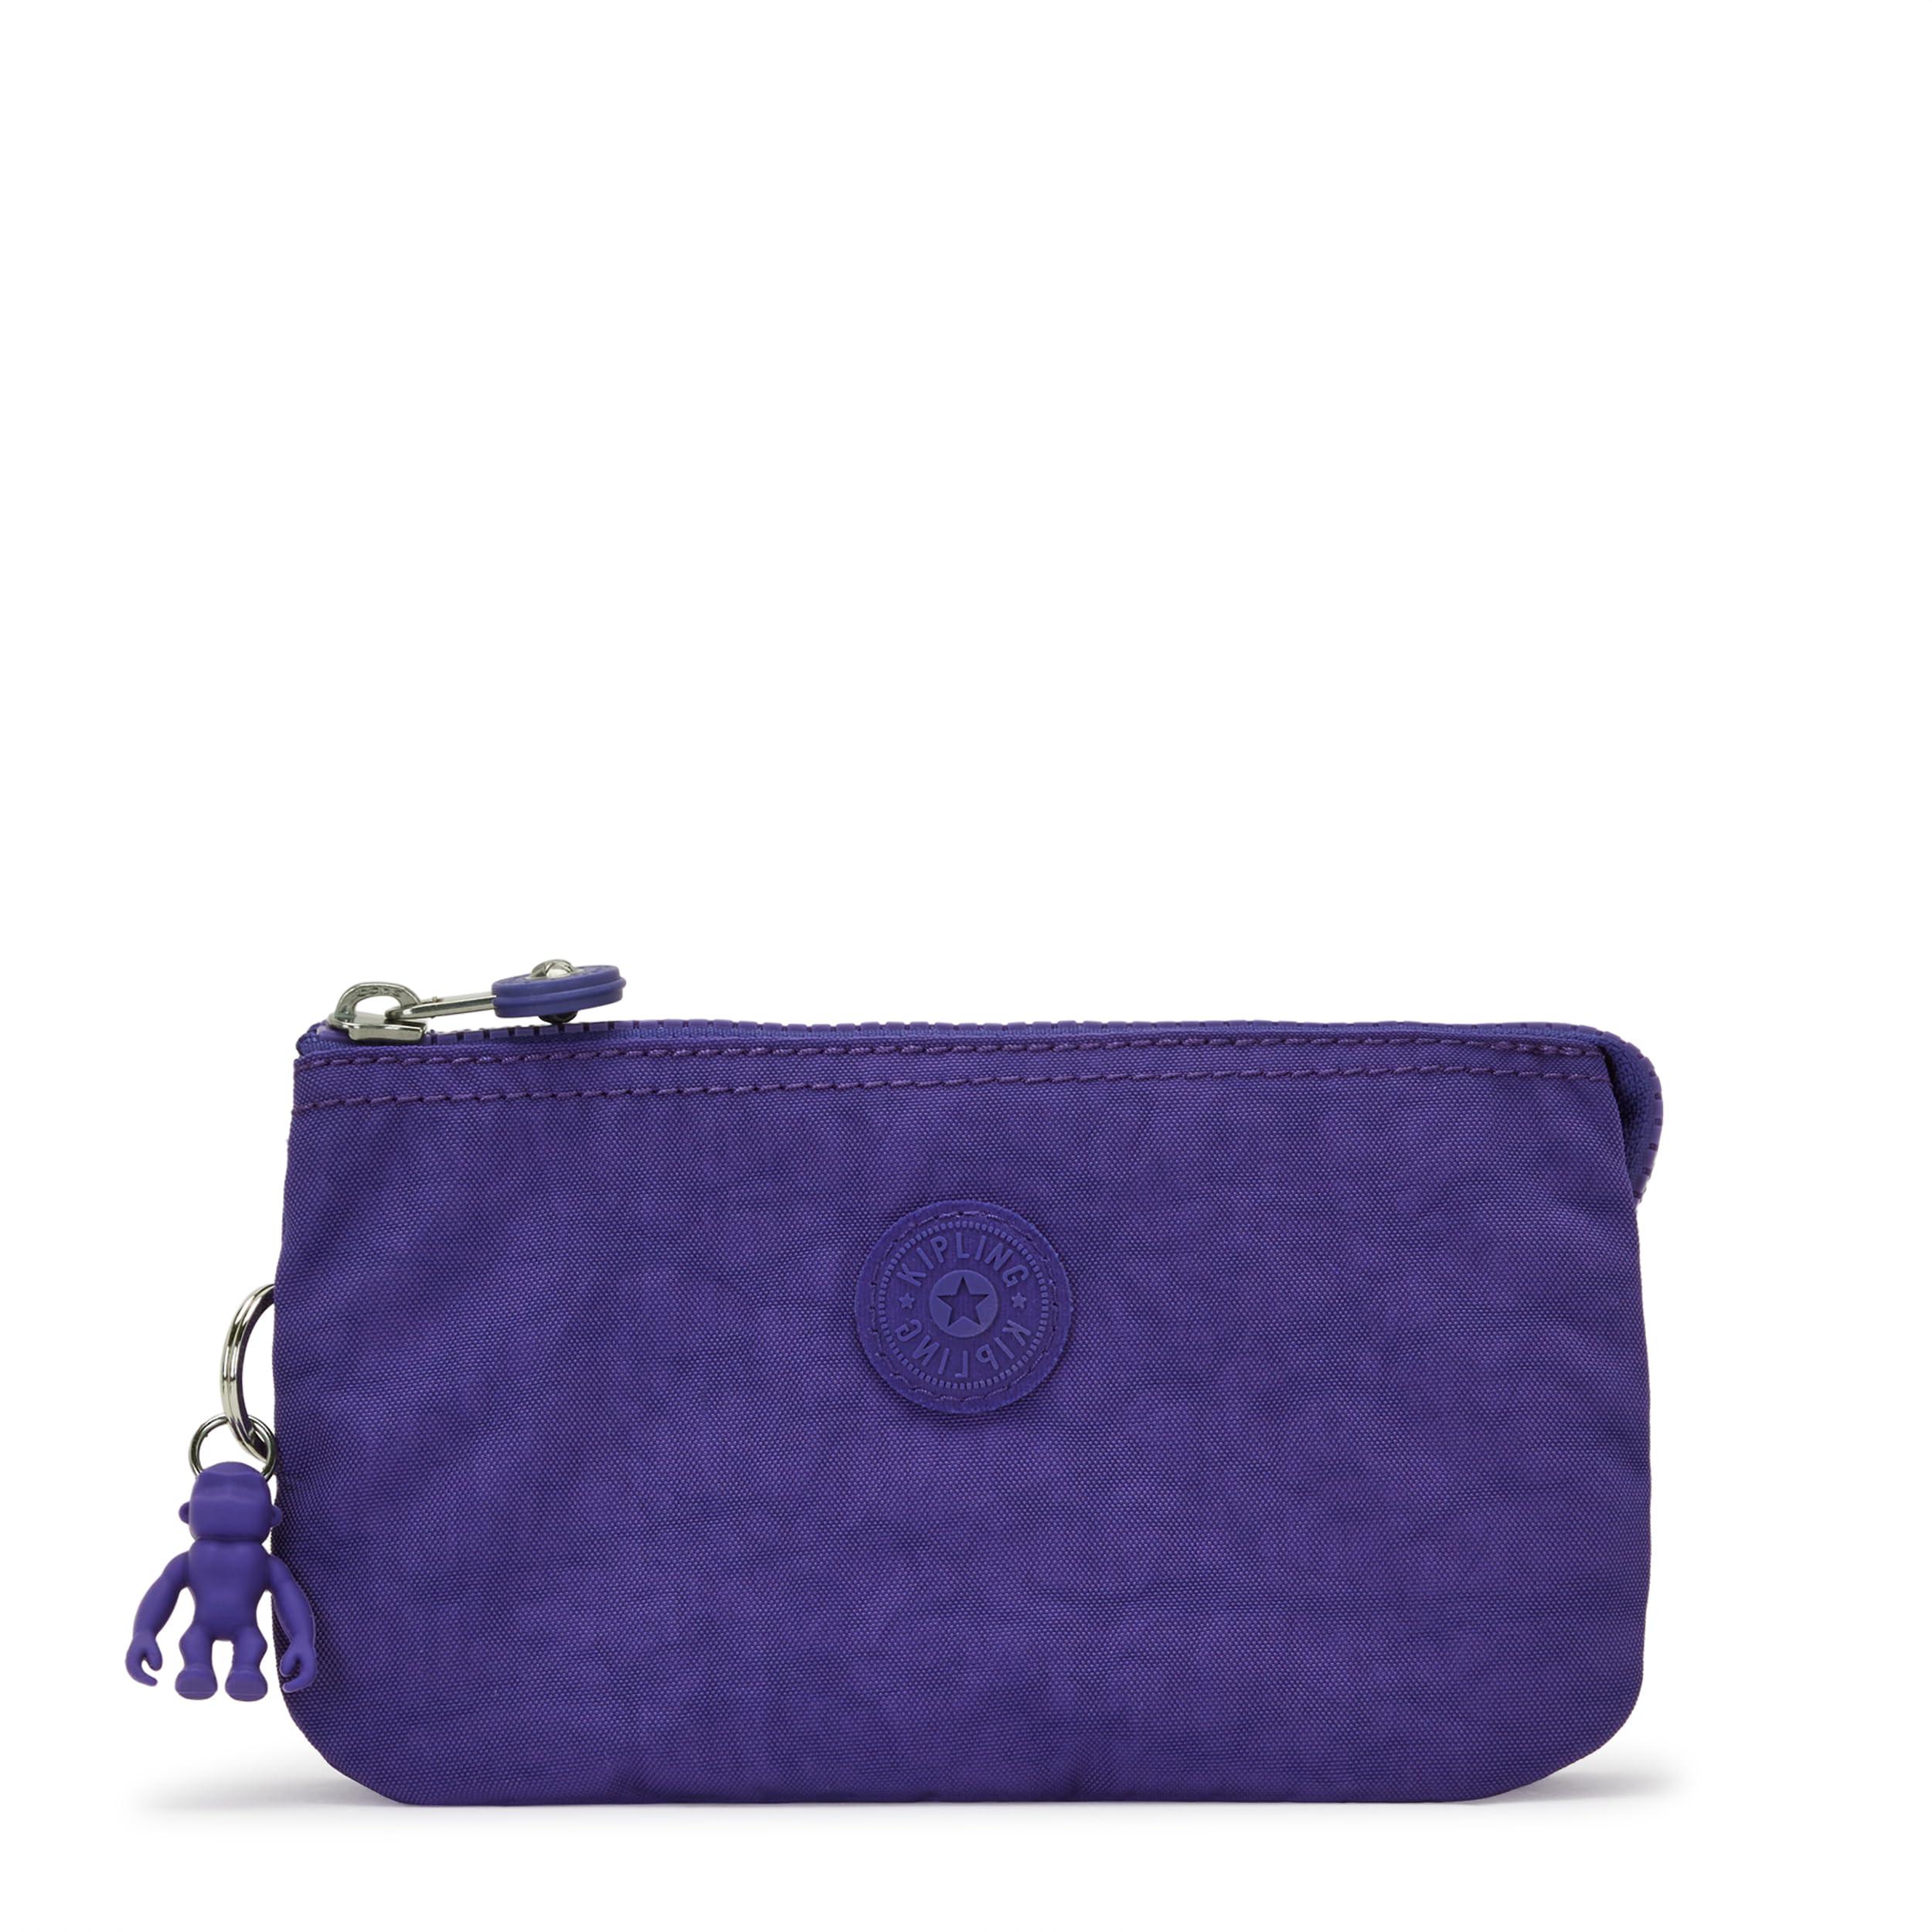 Kipling Large 'Because I Said So'-Mom Purple Clutch Beauty Purse Bag New  RRP £45 | eBay